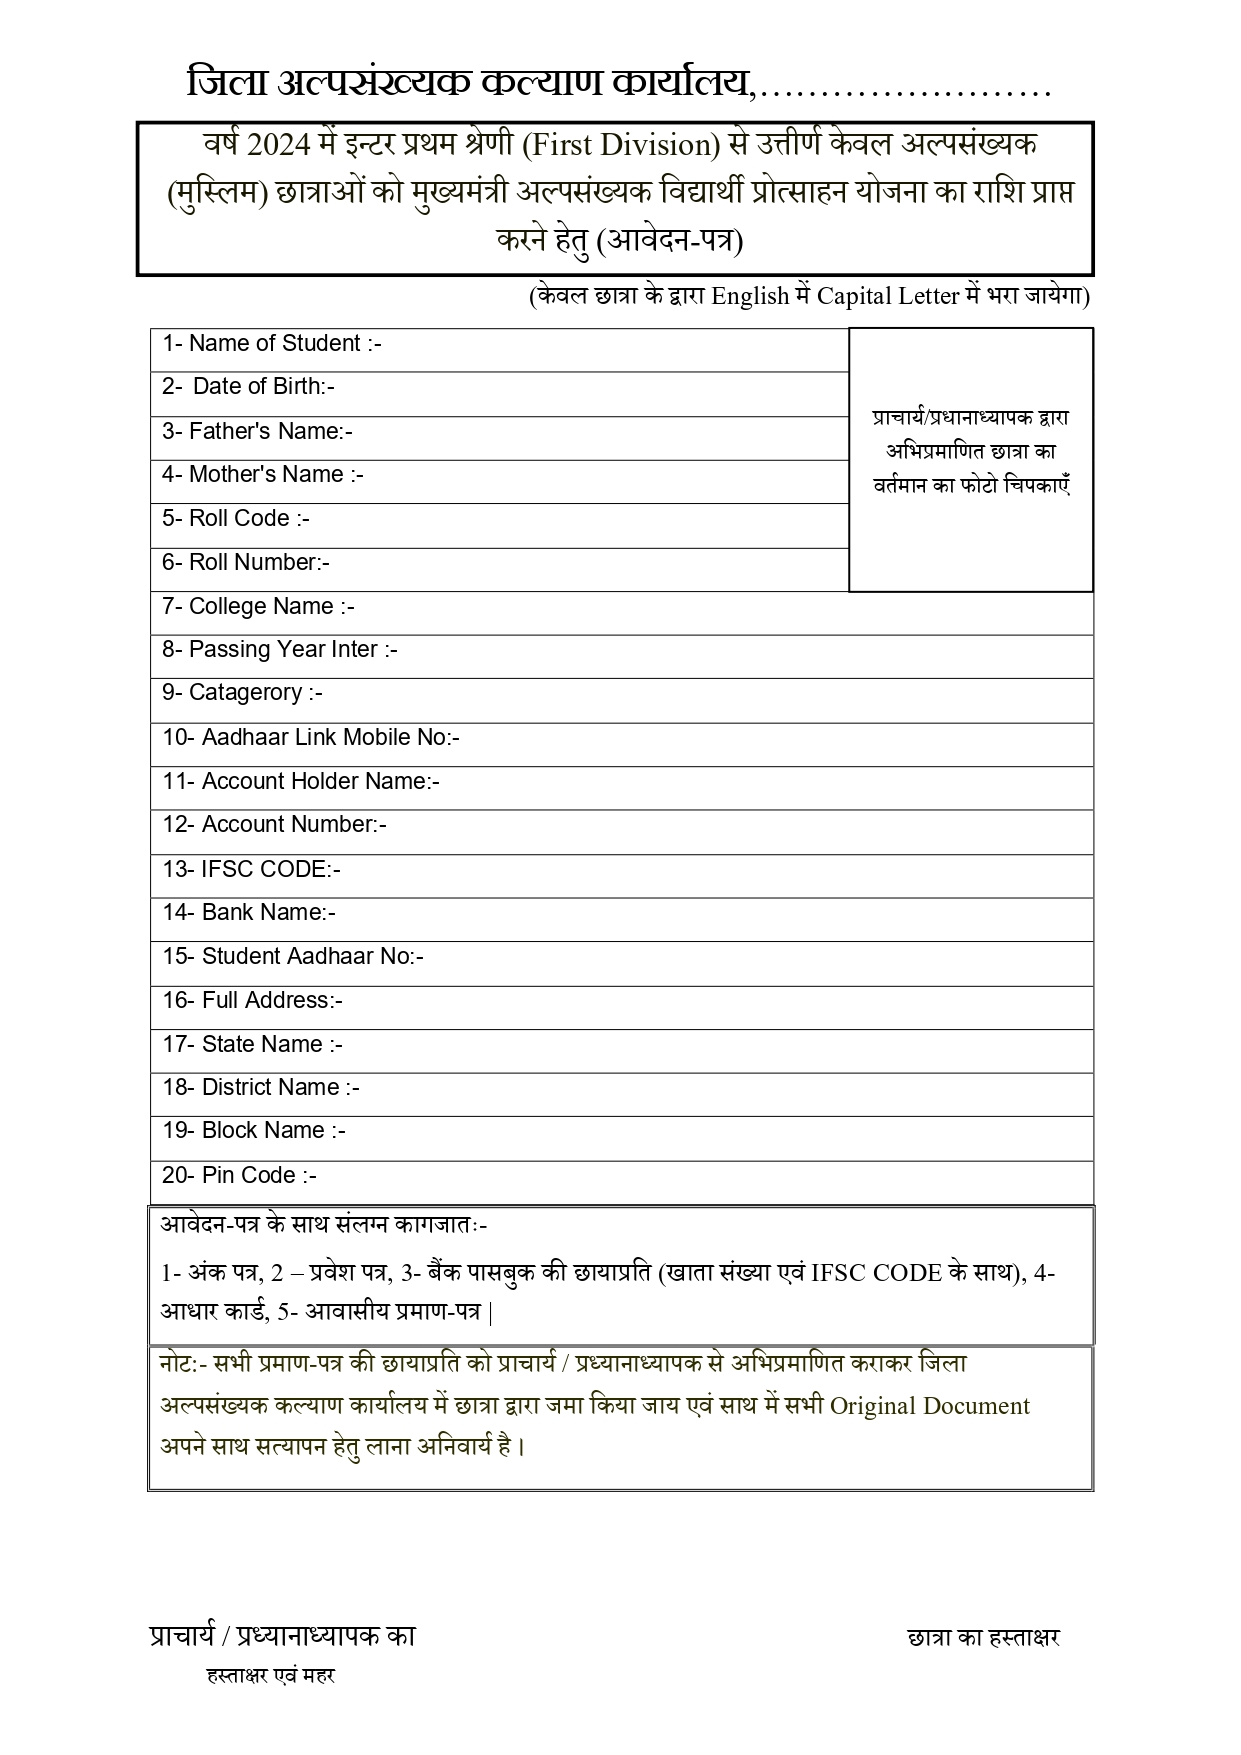 Mukhyamantri Alpsankhyak Vidyarthi Protsahan Yojna Application Form